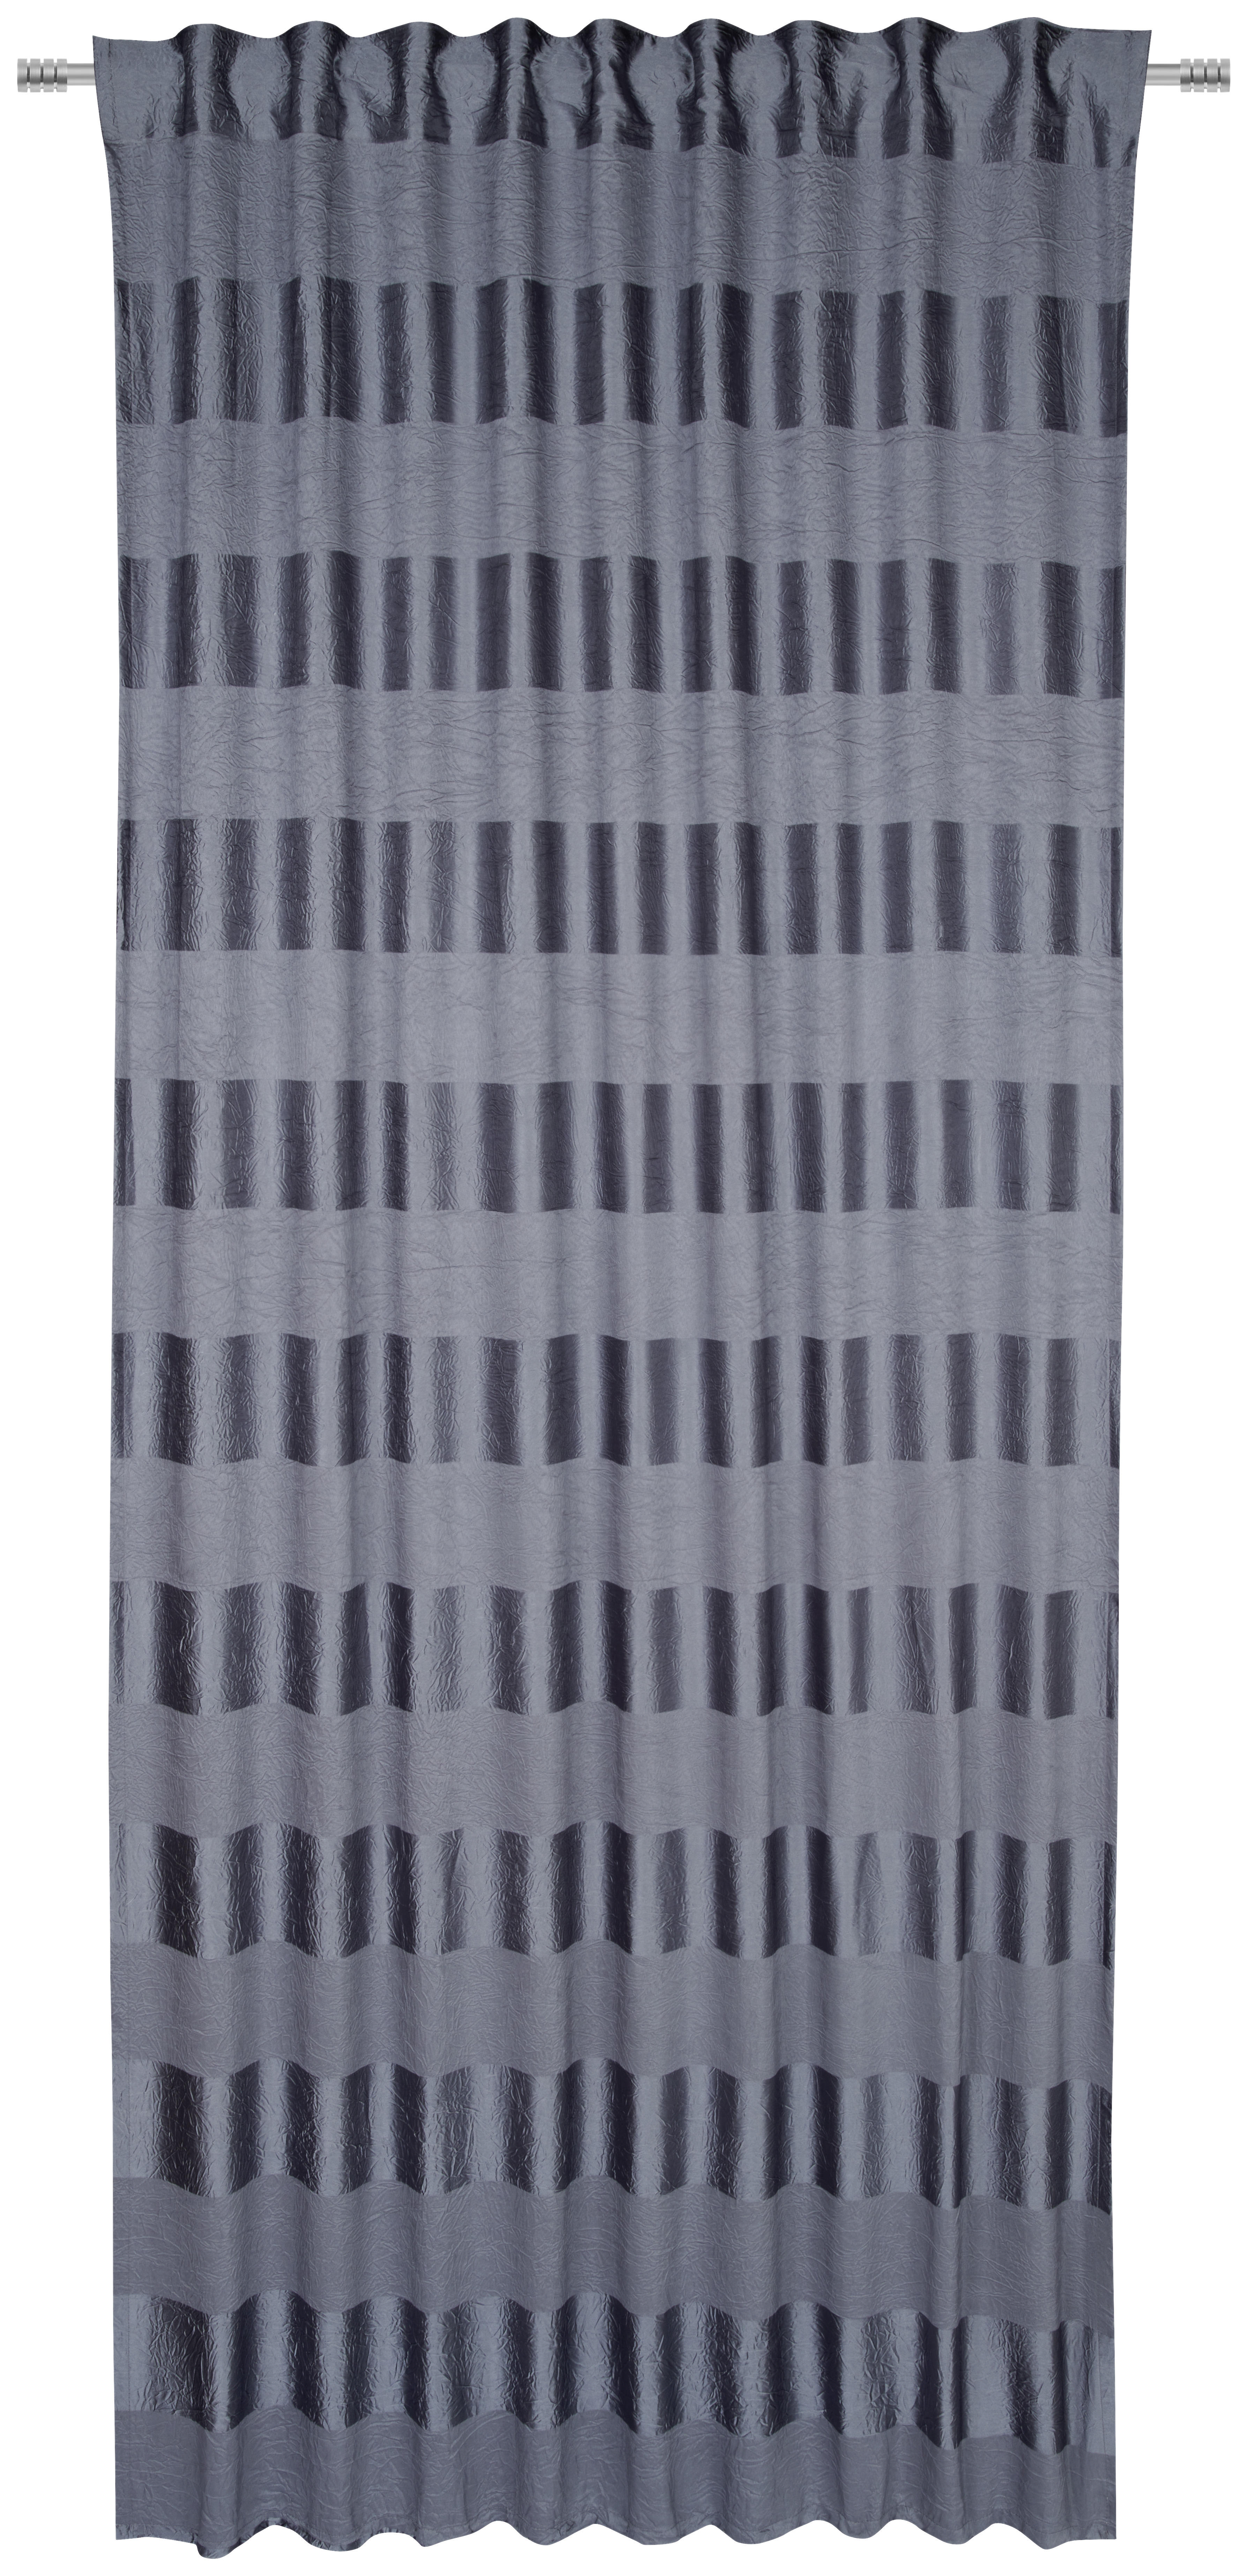 FERTIGVORHANG GISBORNE blickdicht 135/245 cm   - Anthrazit, Basics, Textil (135/245cm) - Esposa